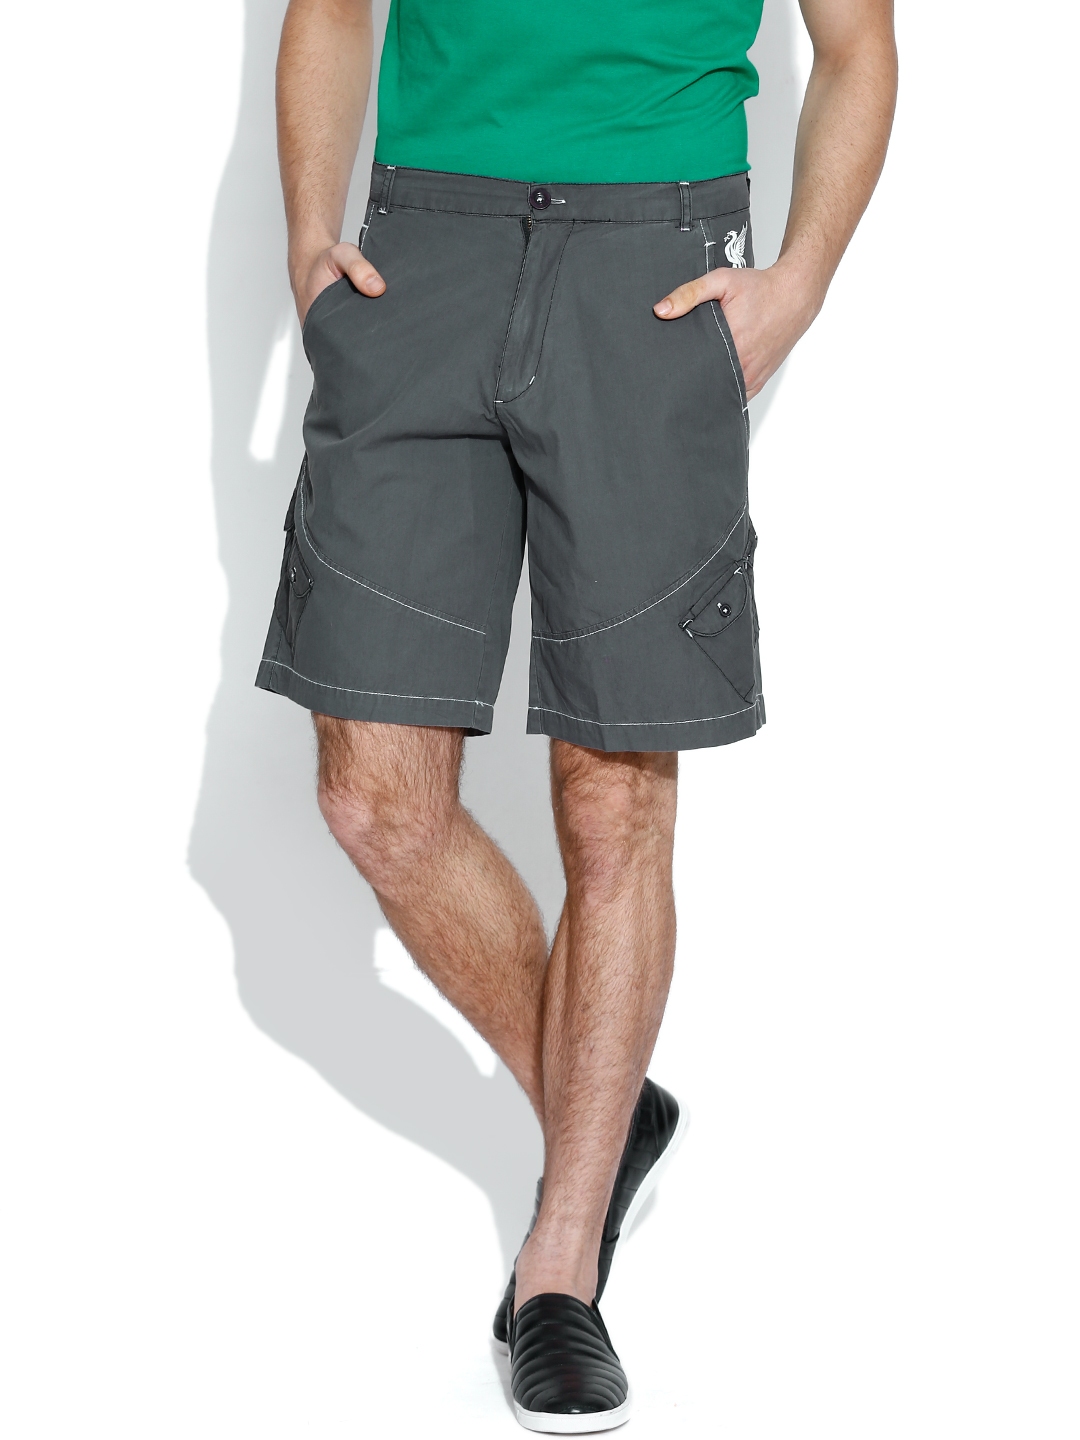 grey liverpool shorts